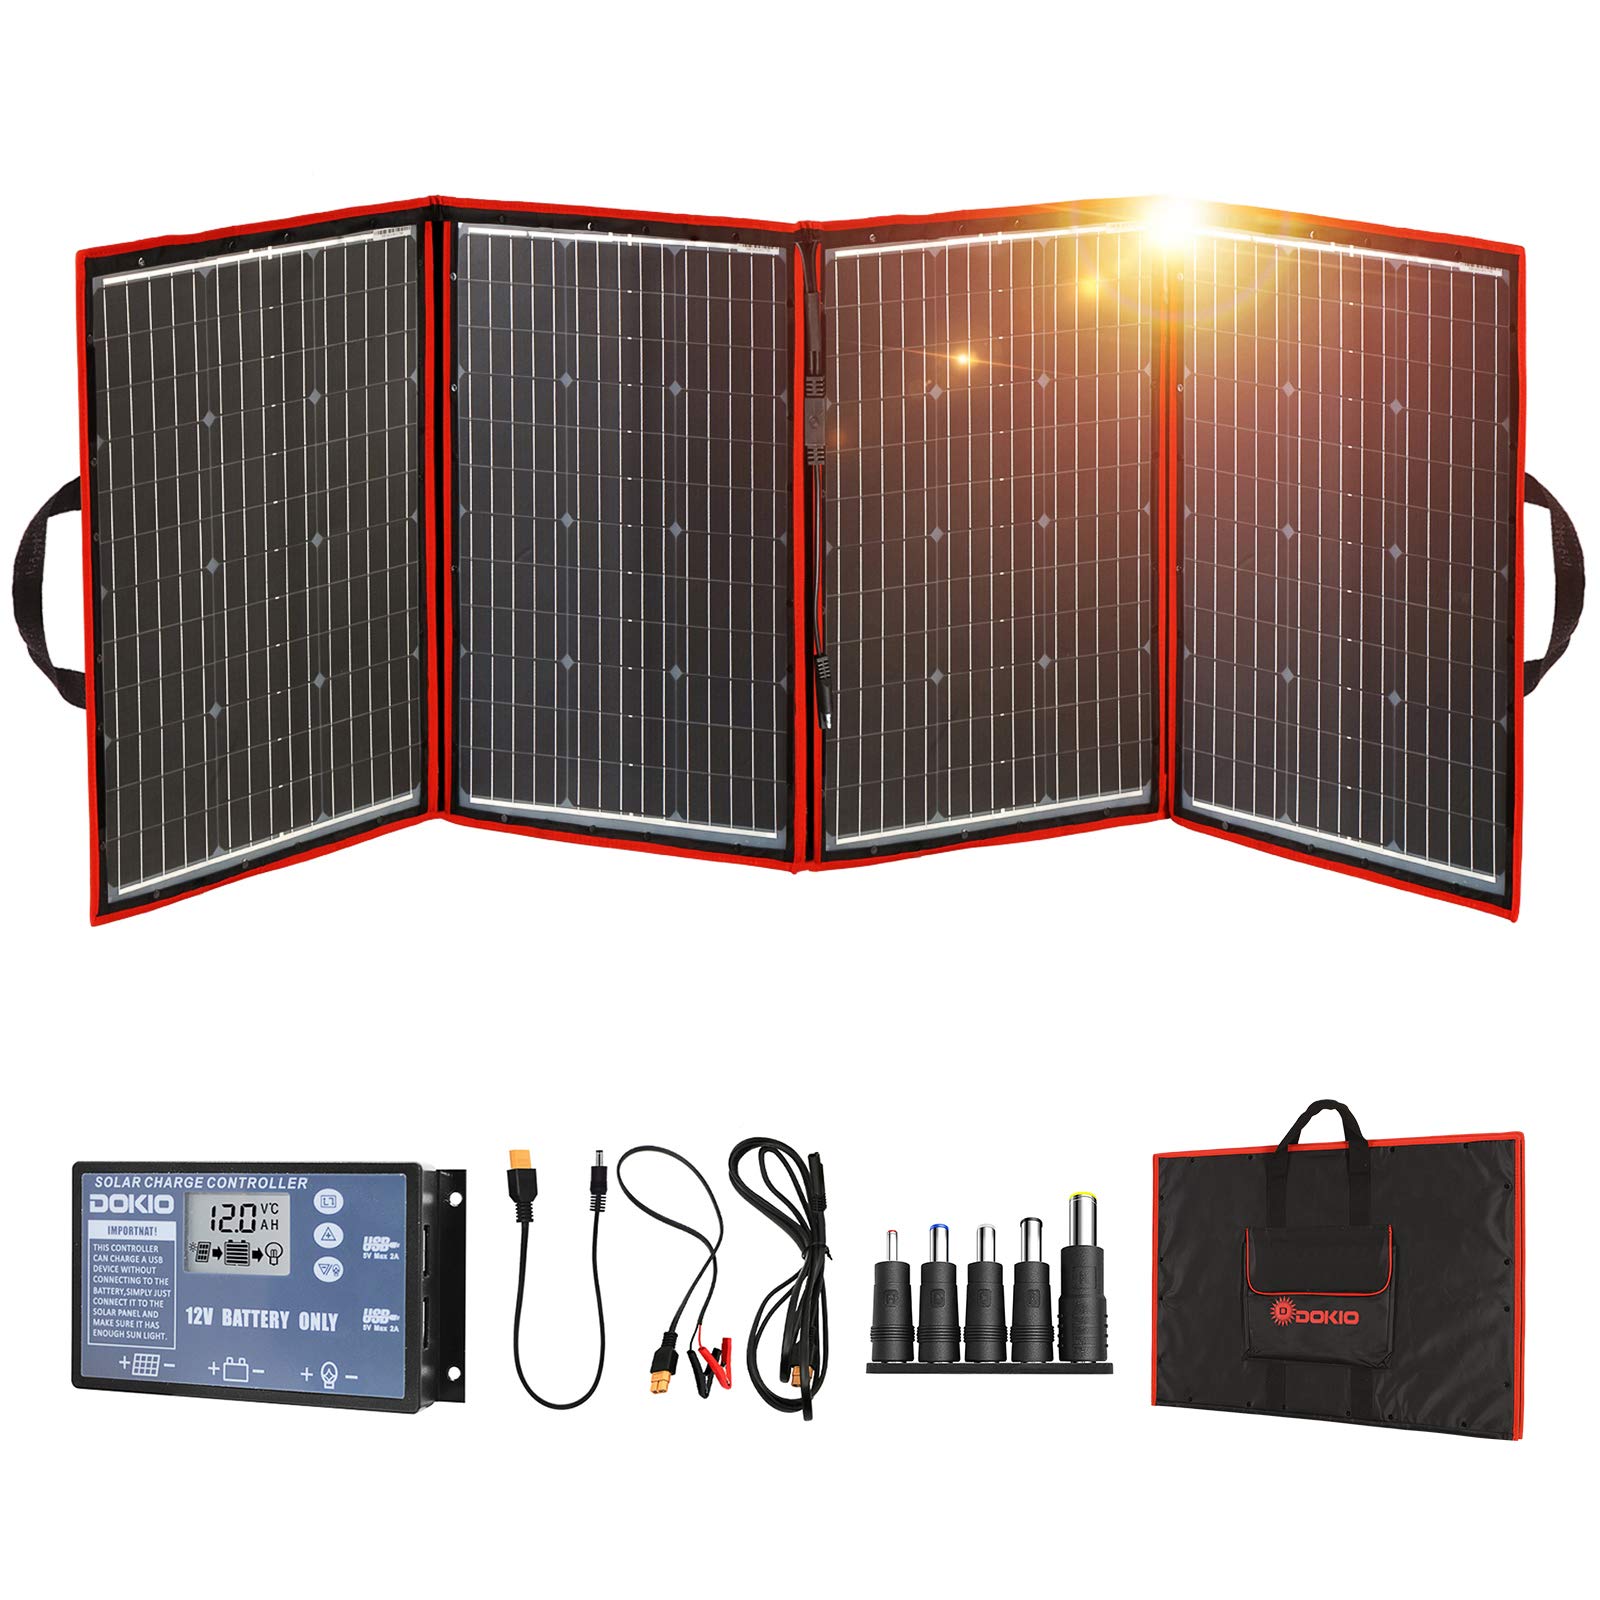 DOKIO 220W Foldable Solar Panel Kit Lightweight